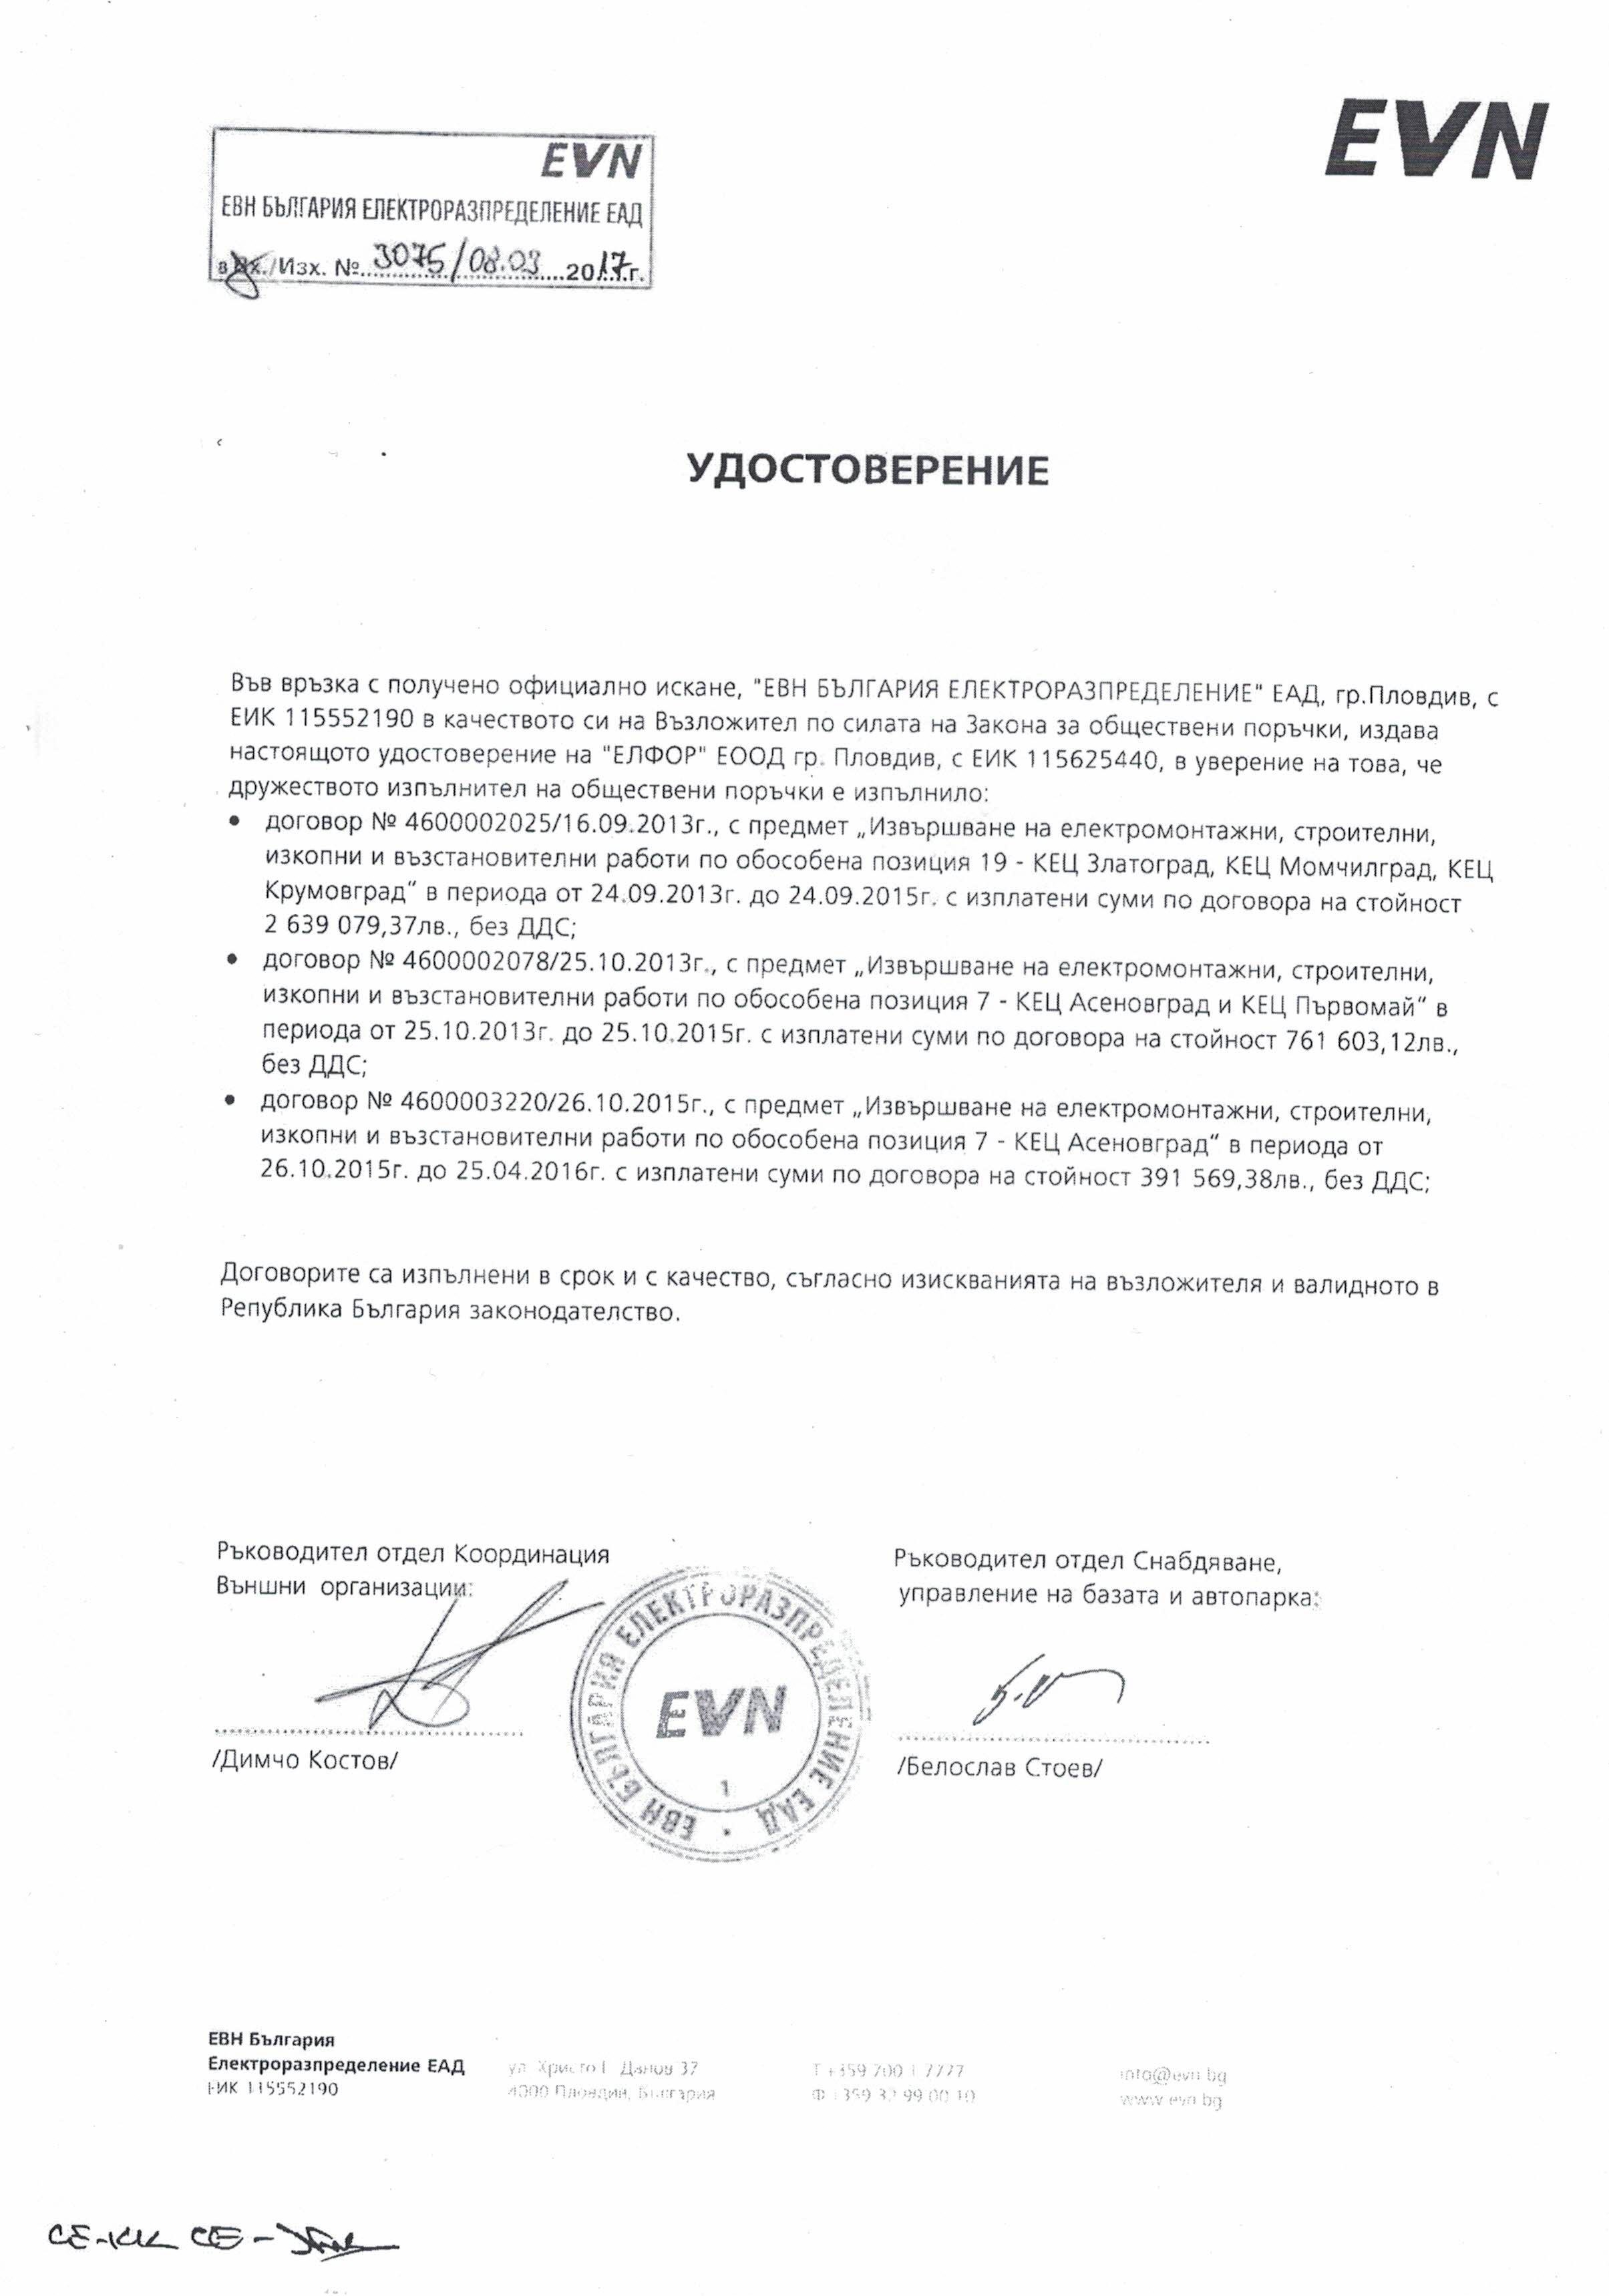 Certificate of good performance EVN Bulgaria Elektrorazpredelenie EAD (Elektrorazpredelenie Yug EAD) 